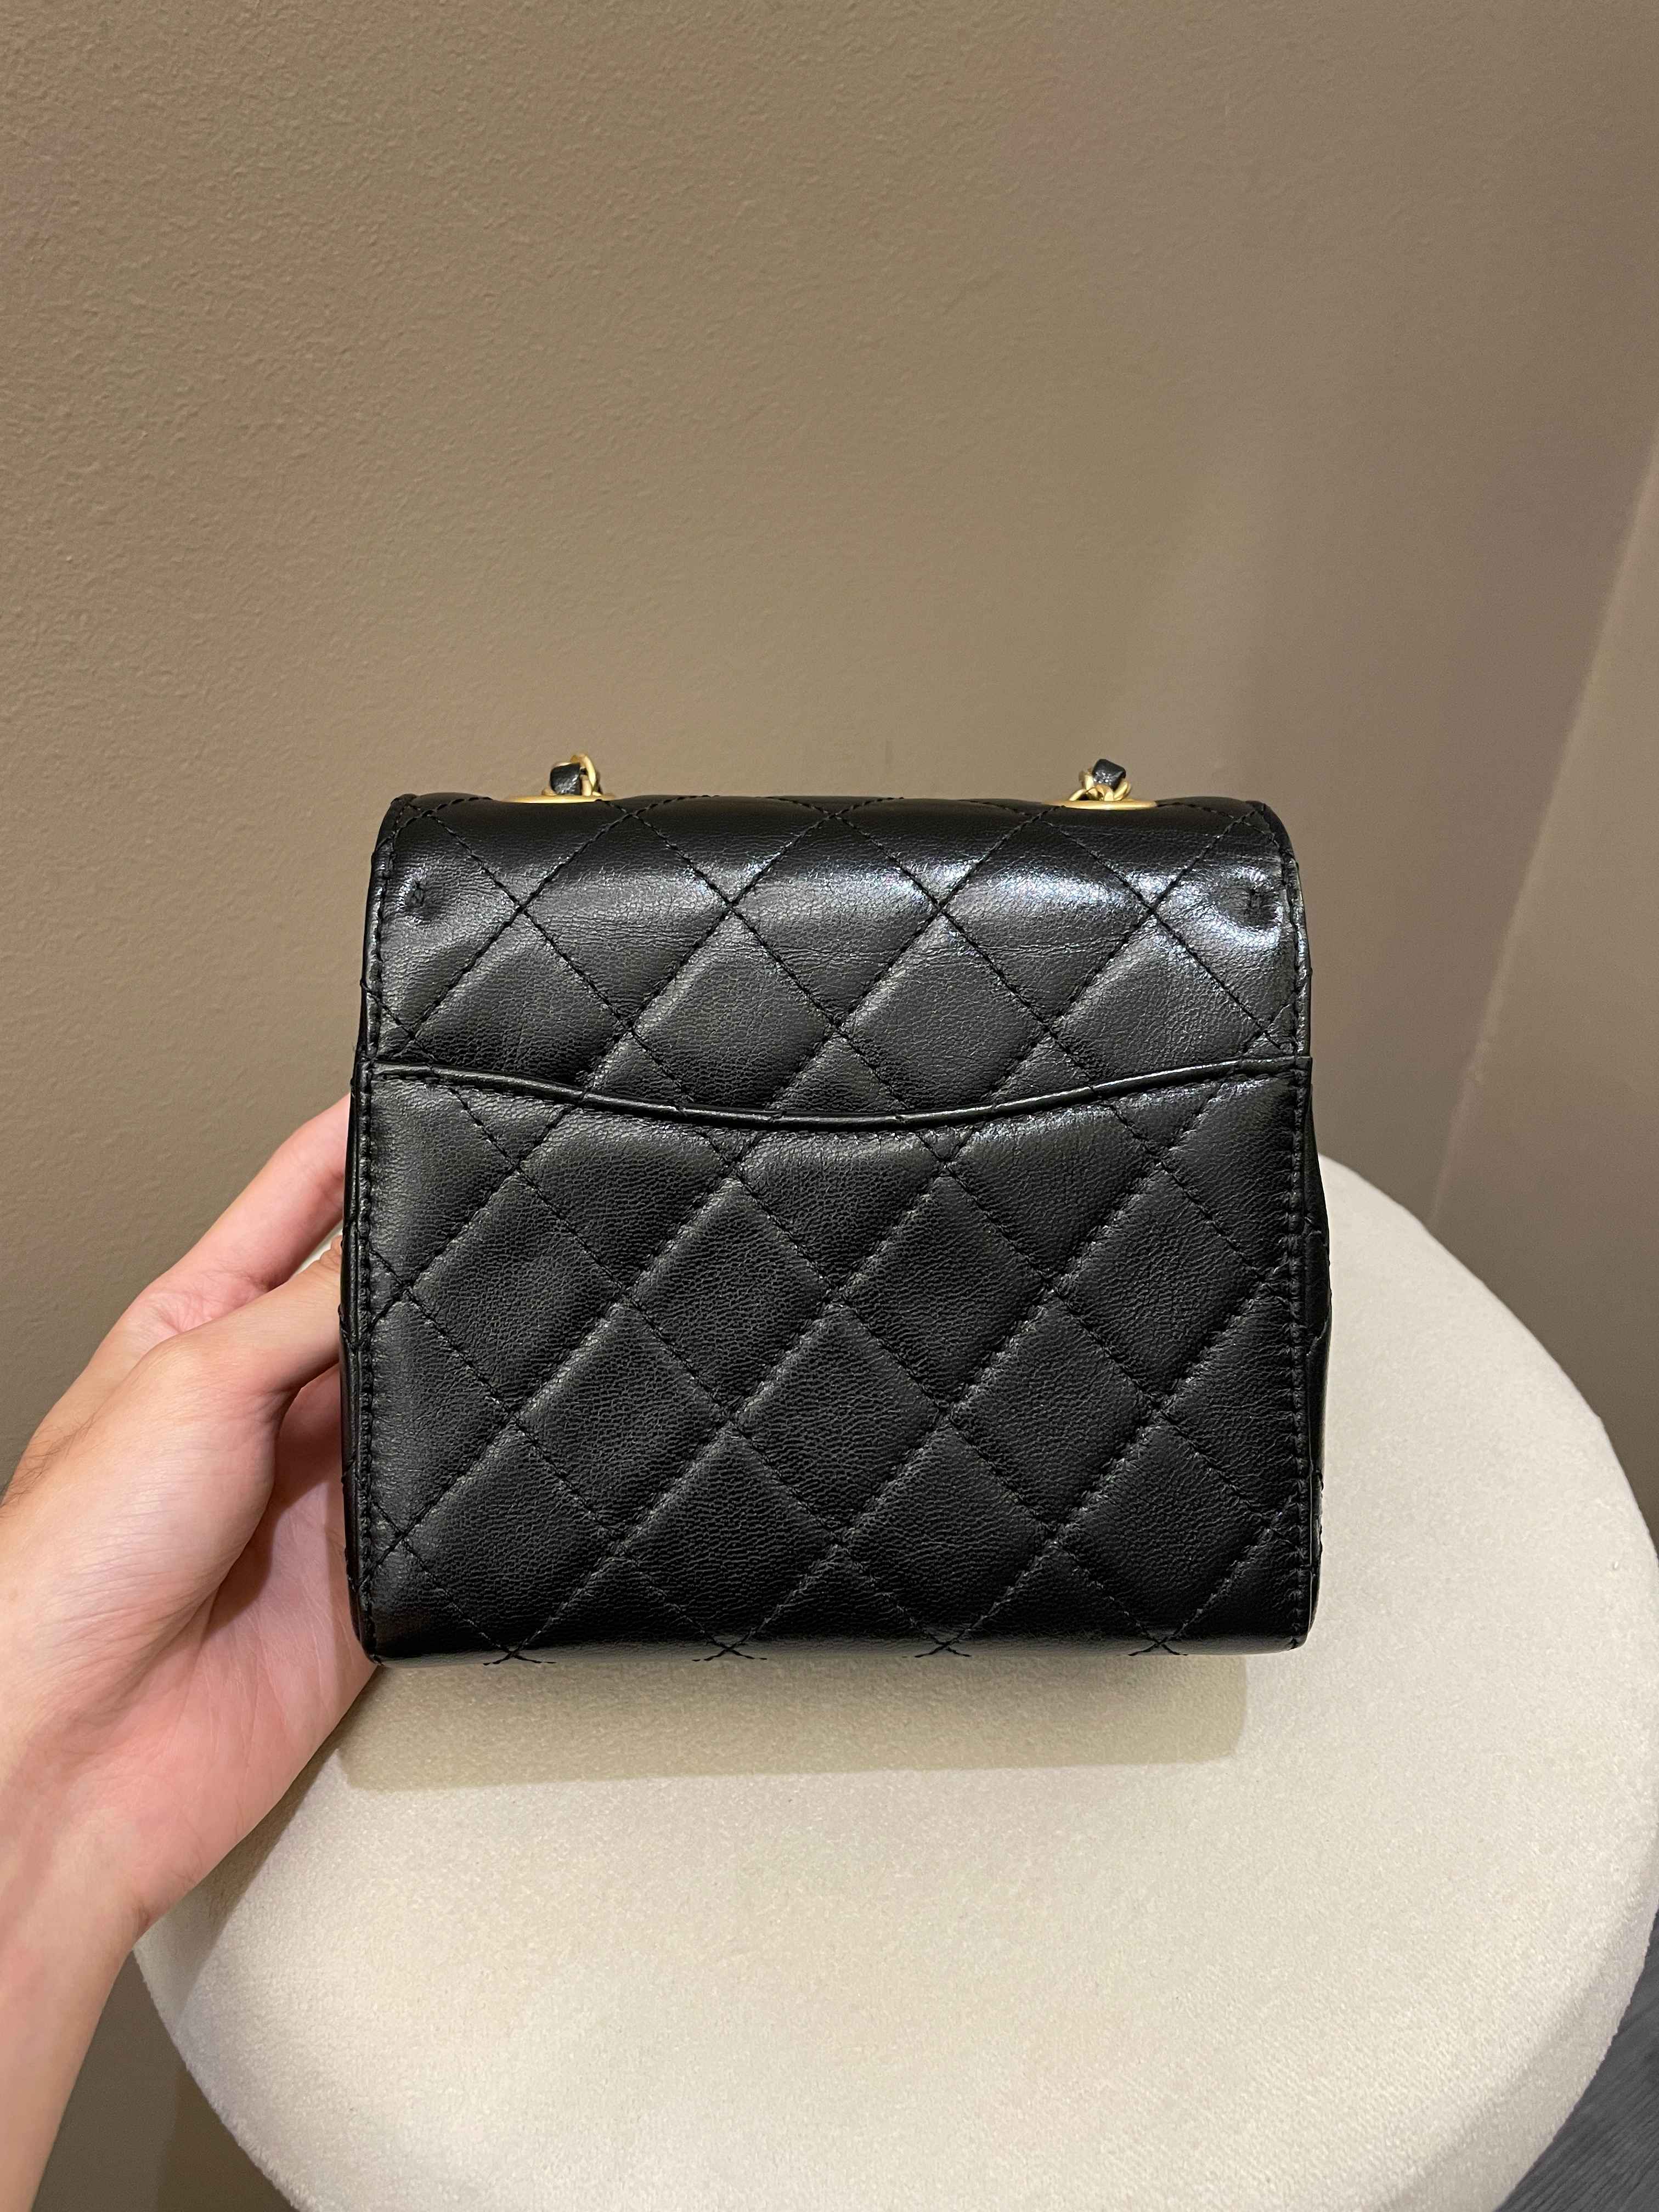 Chanel - Square Mini Classic Flap Bag Caviar Black